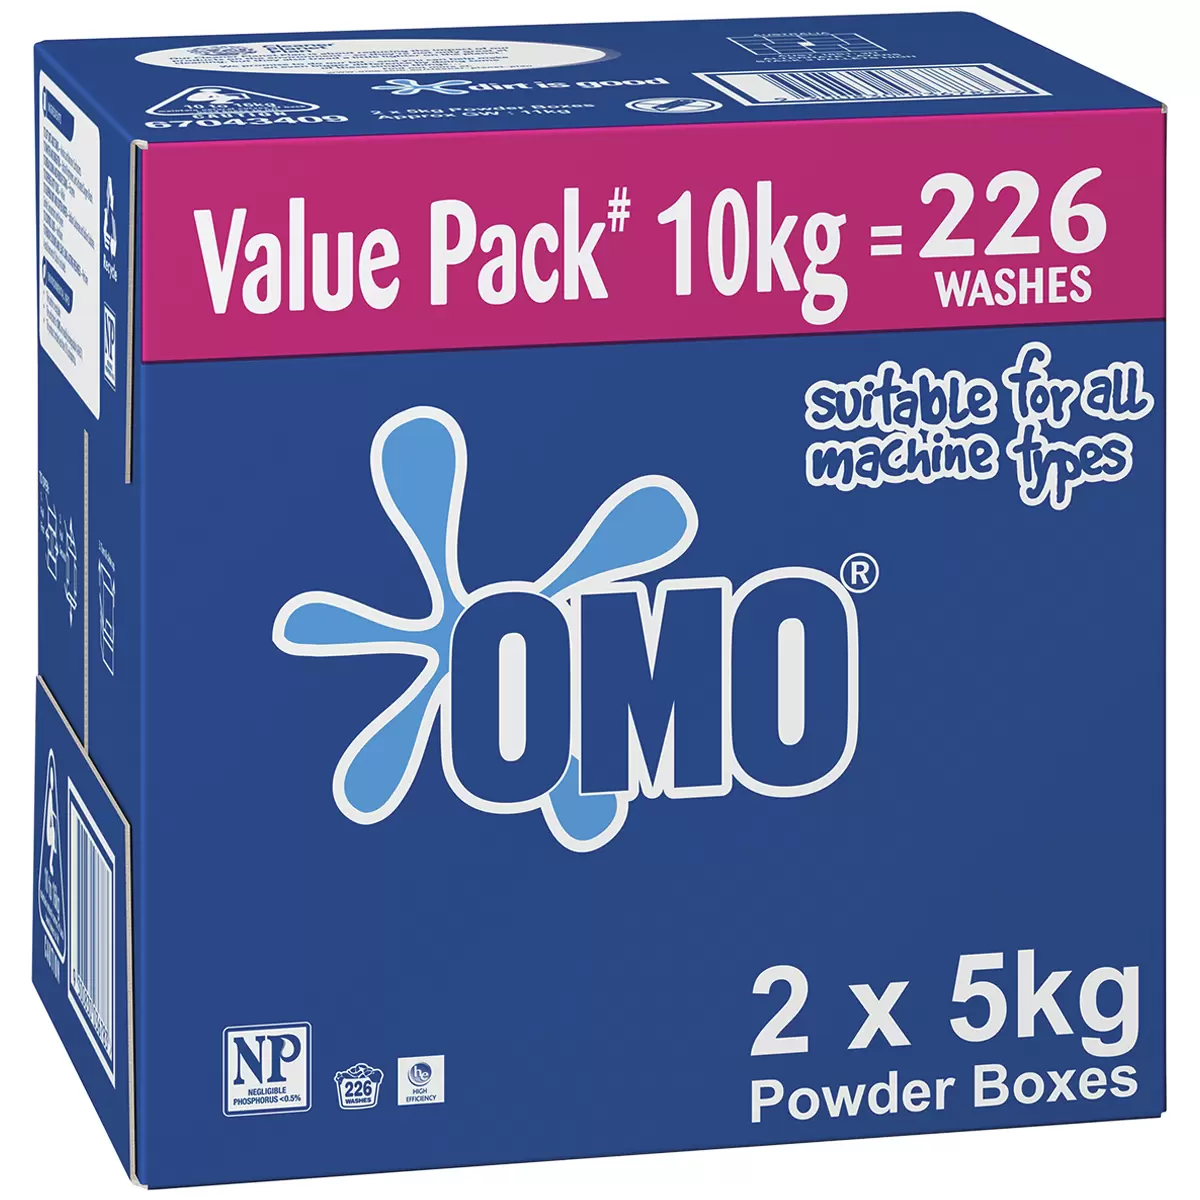 OMO Active Clean Laundry Powder 2 x 5kg